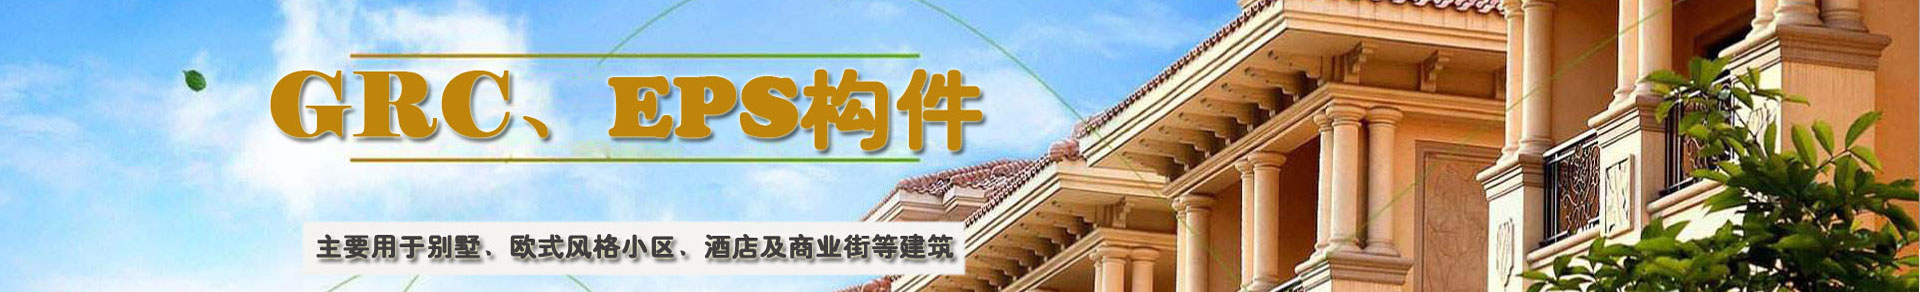  Hainan sculpture product banner